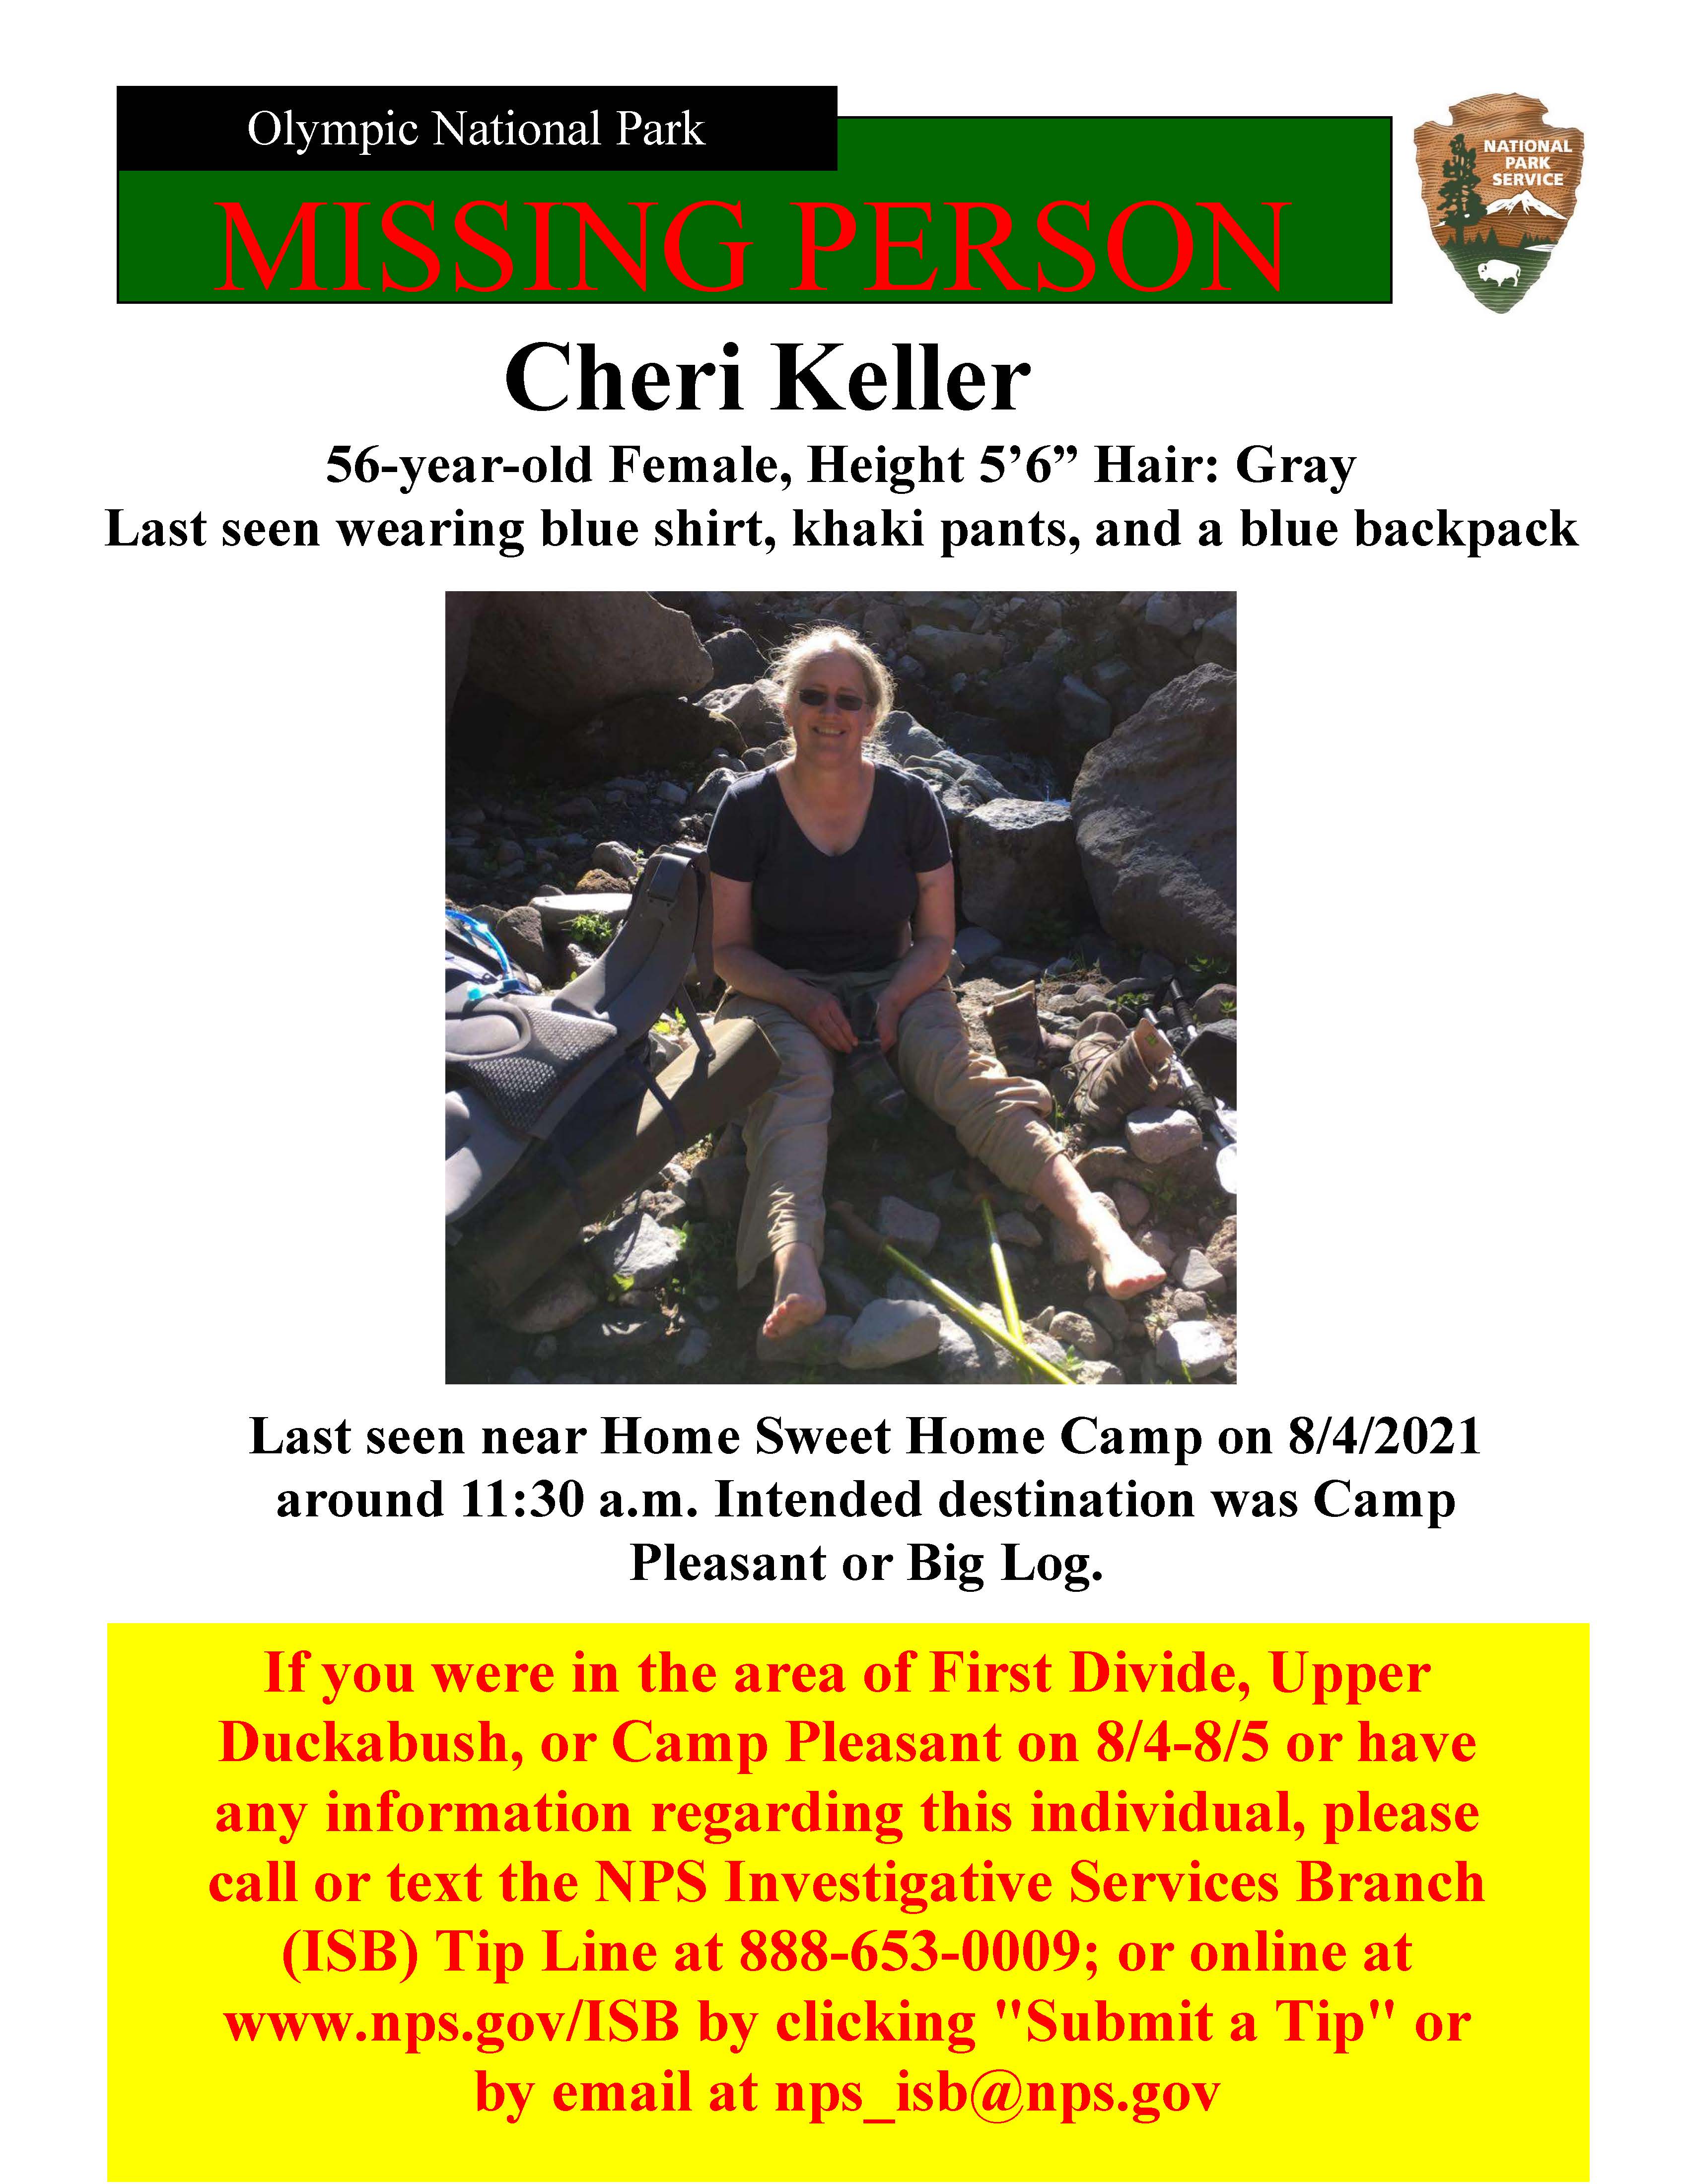 Missing person poster of Cheri Keller